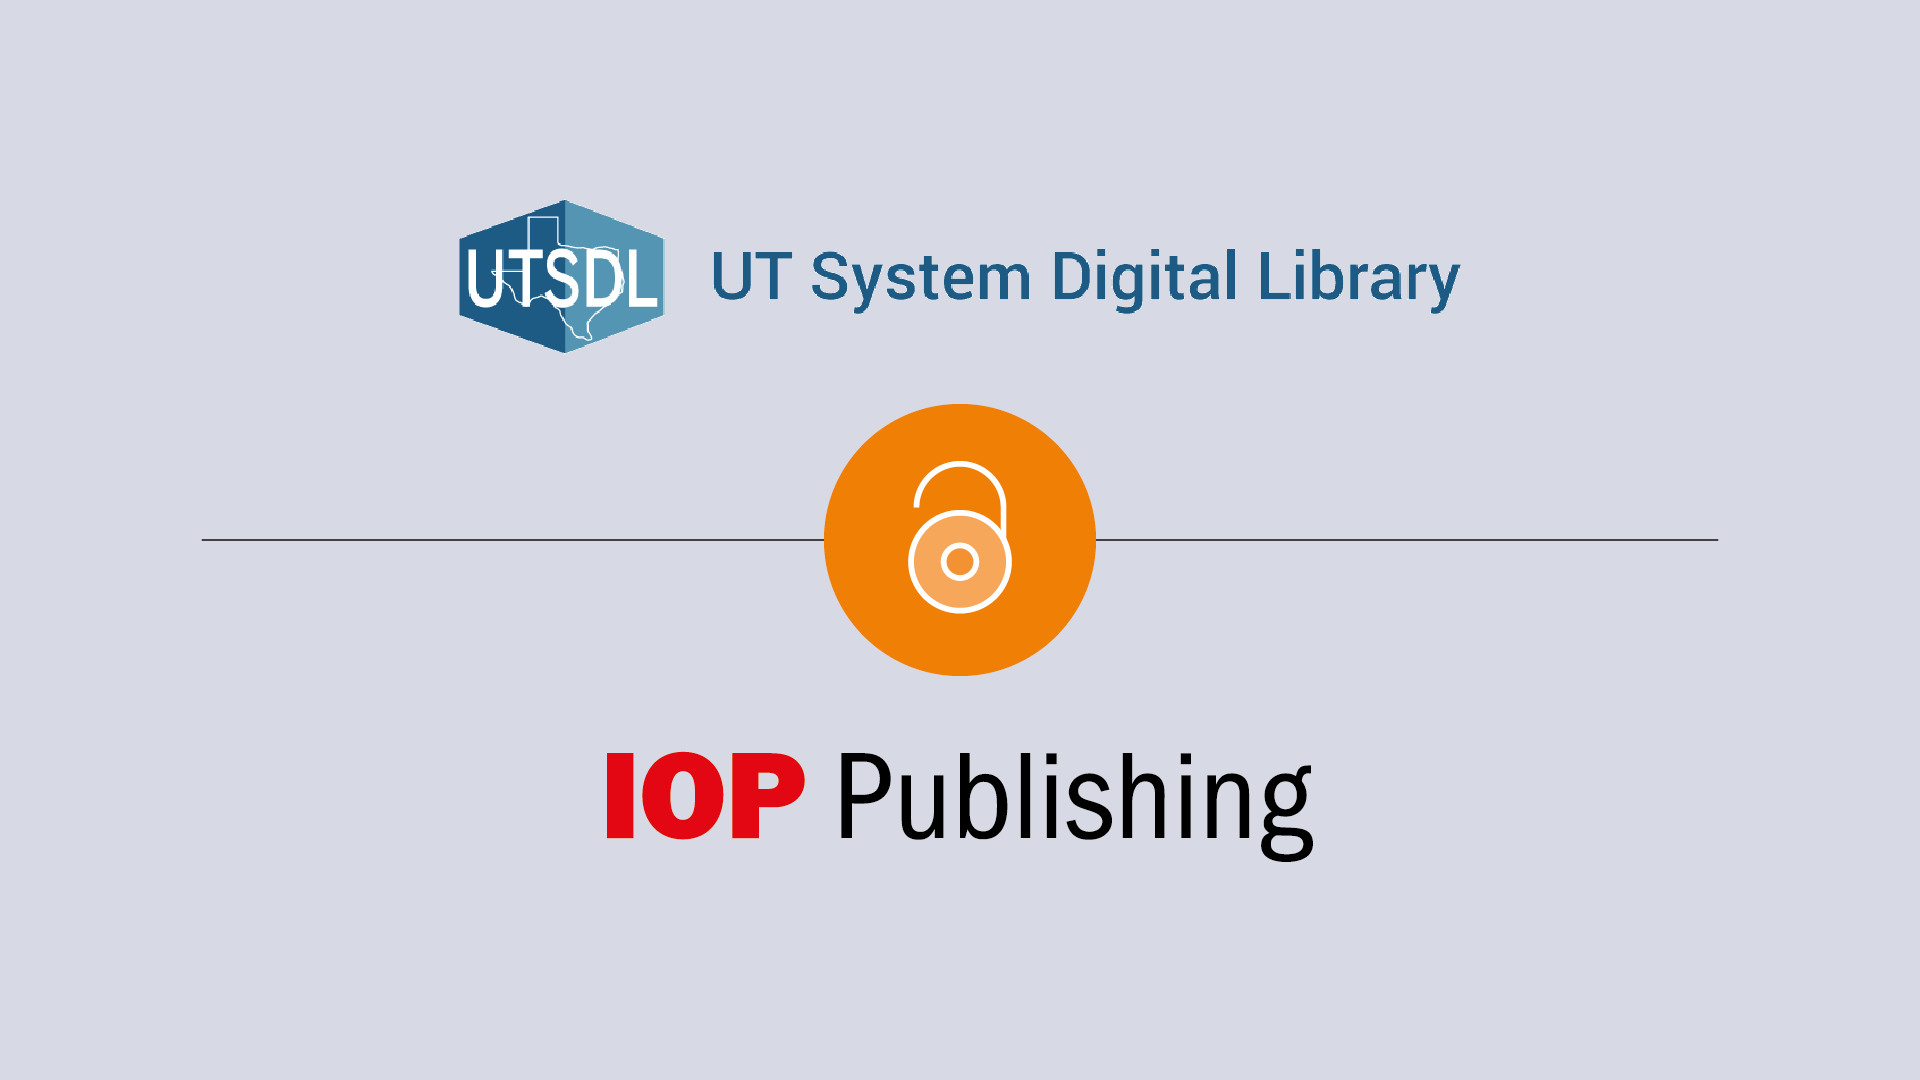 University of Texas System and IOP Publishing logos